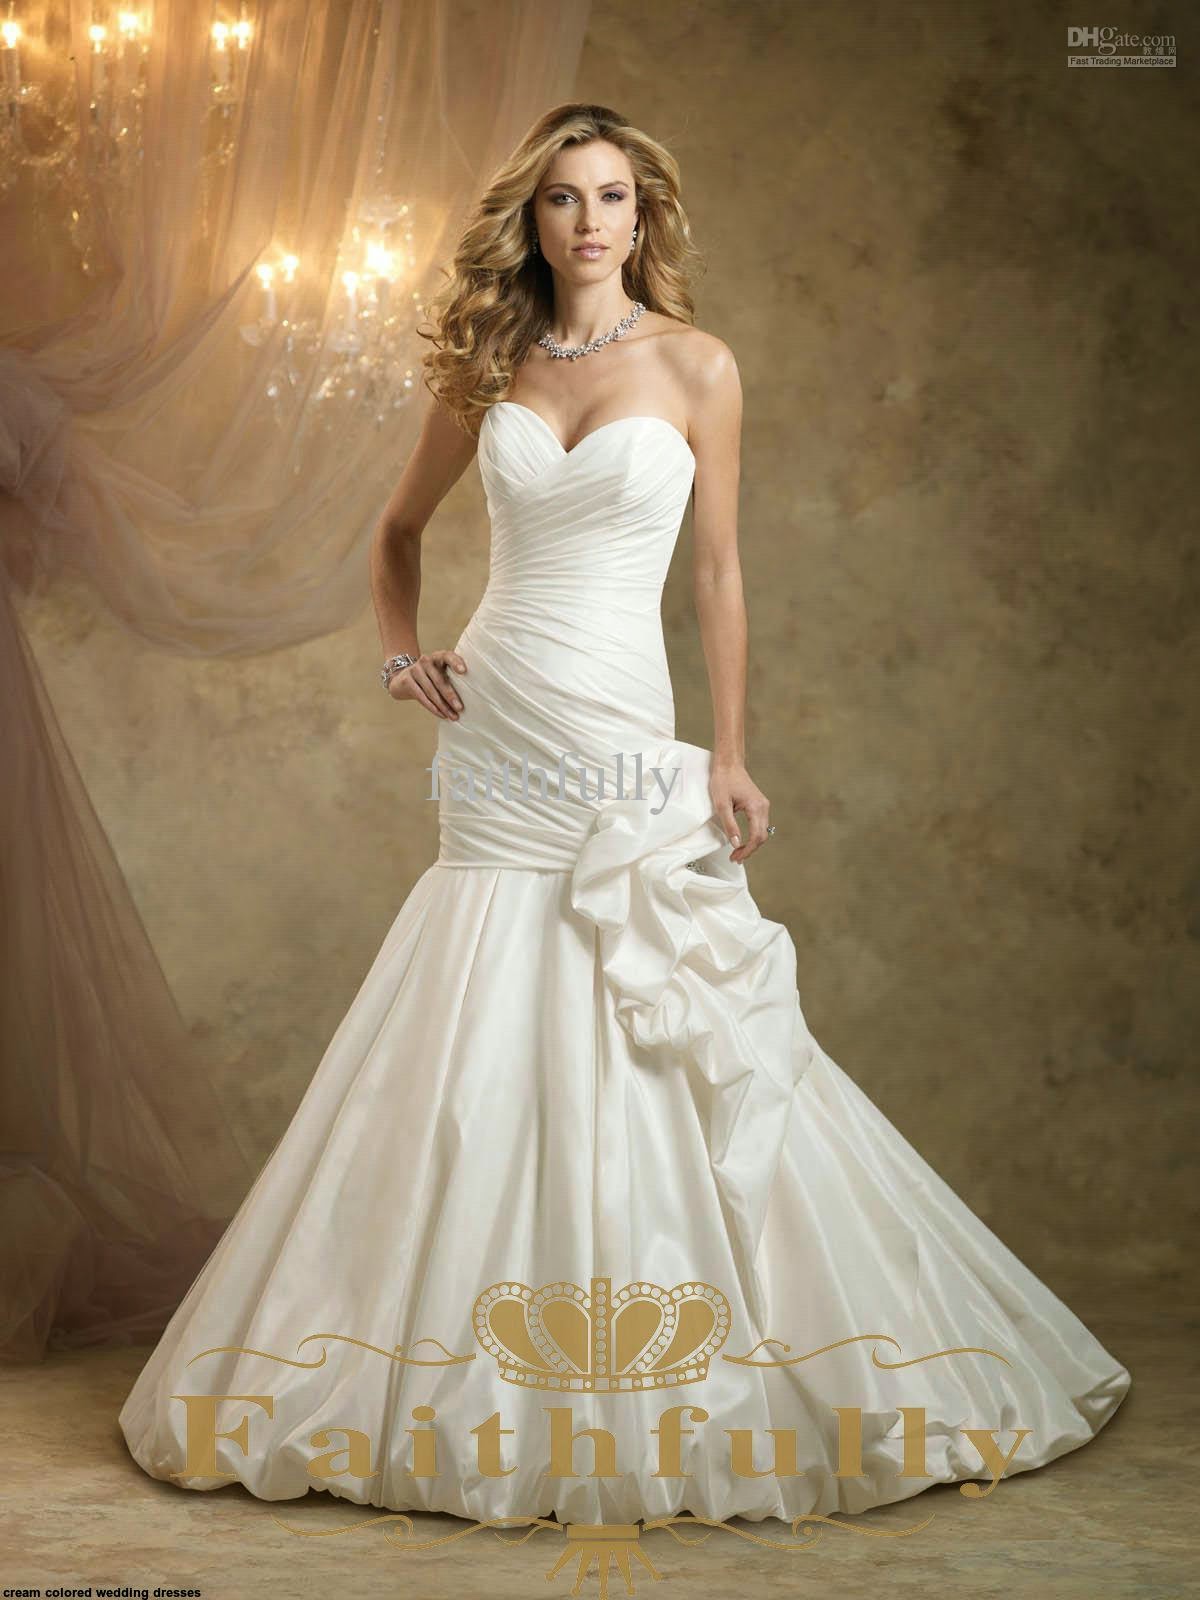 Tips for Cream  Colored  Wedding  Dresses  Wedding  Dresses  